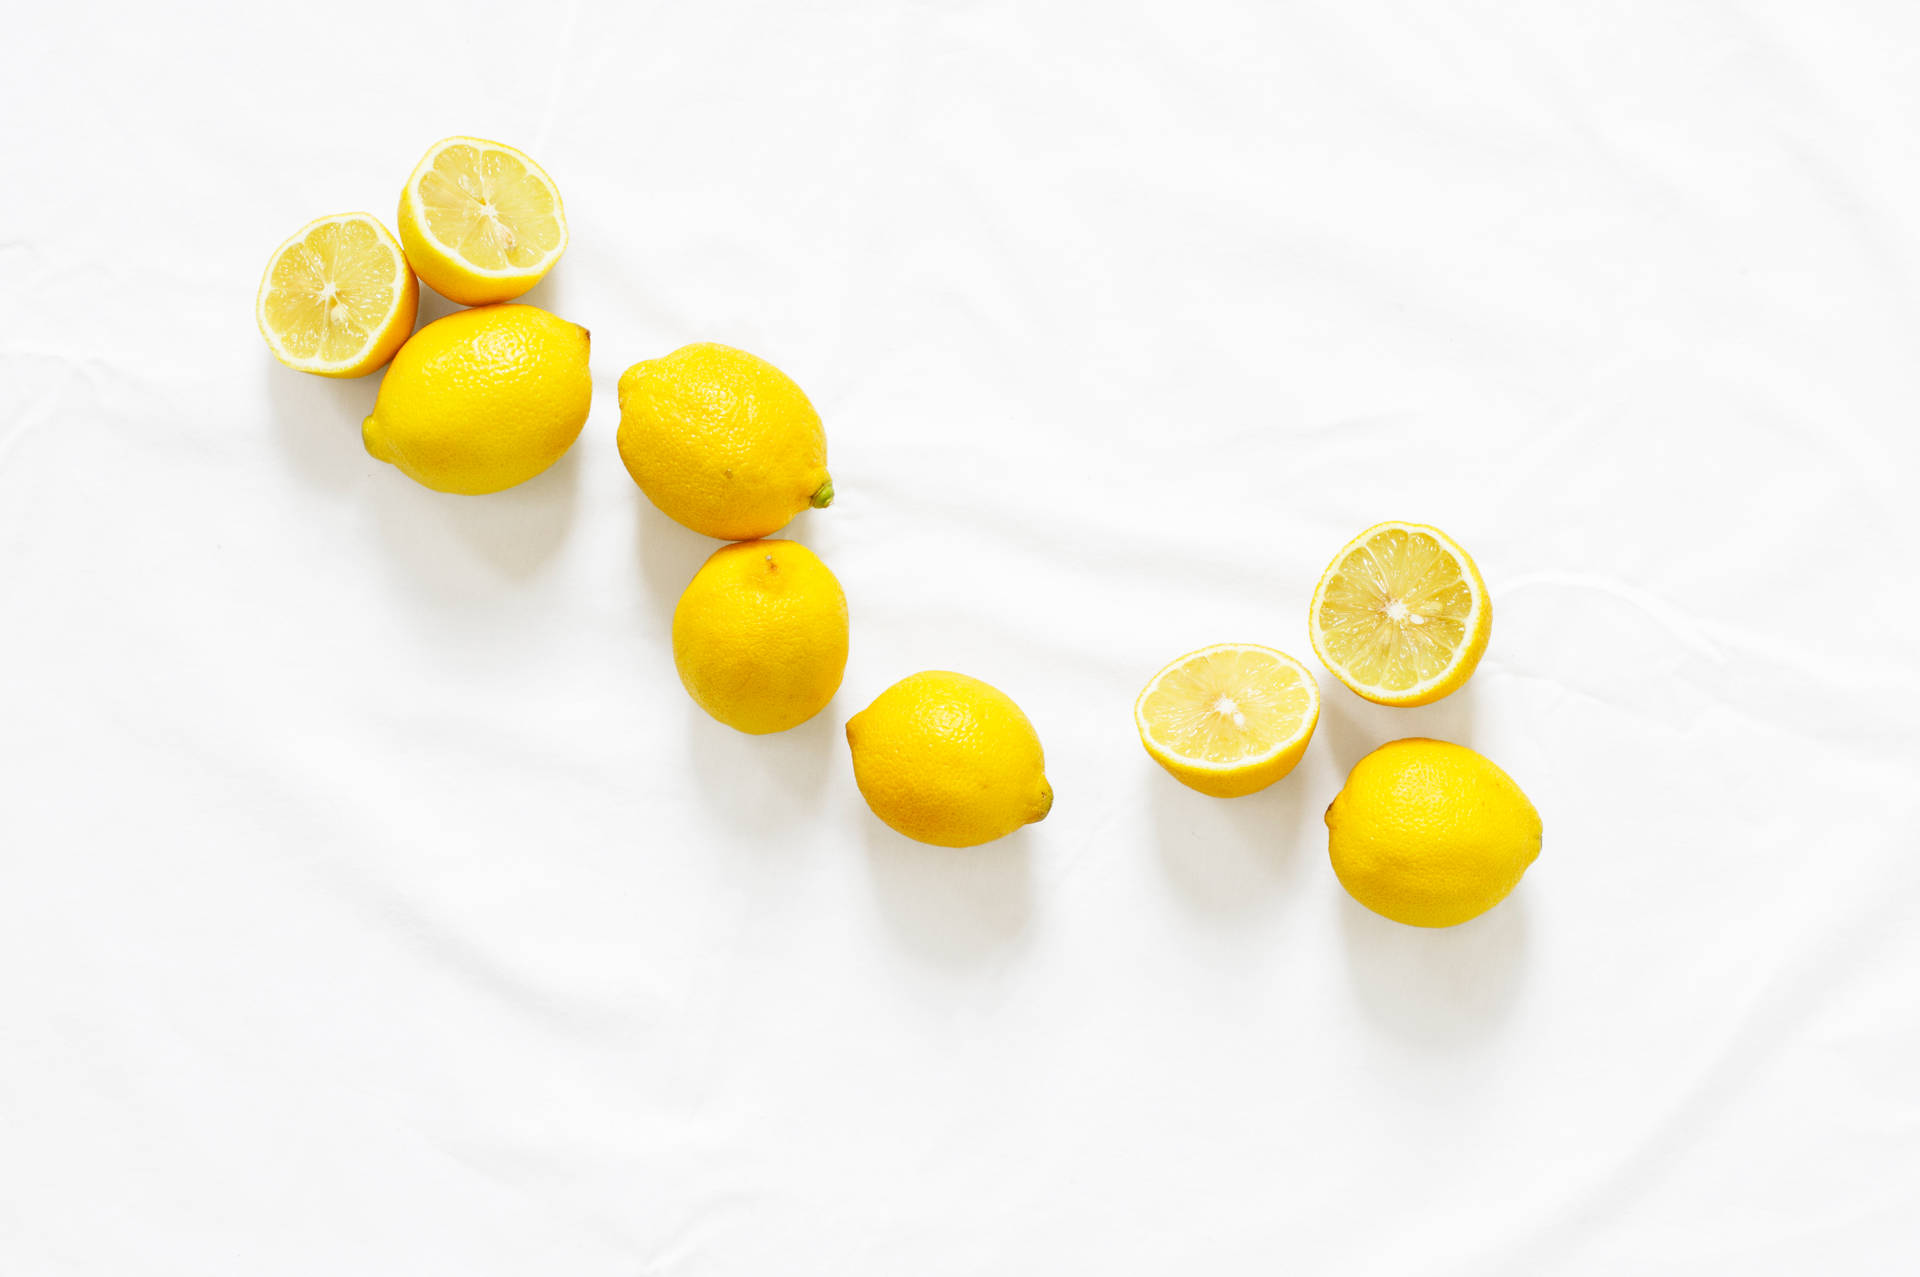 Yellow Lemons On White Surface